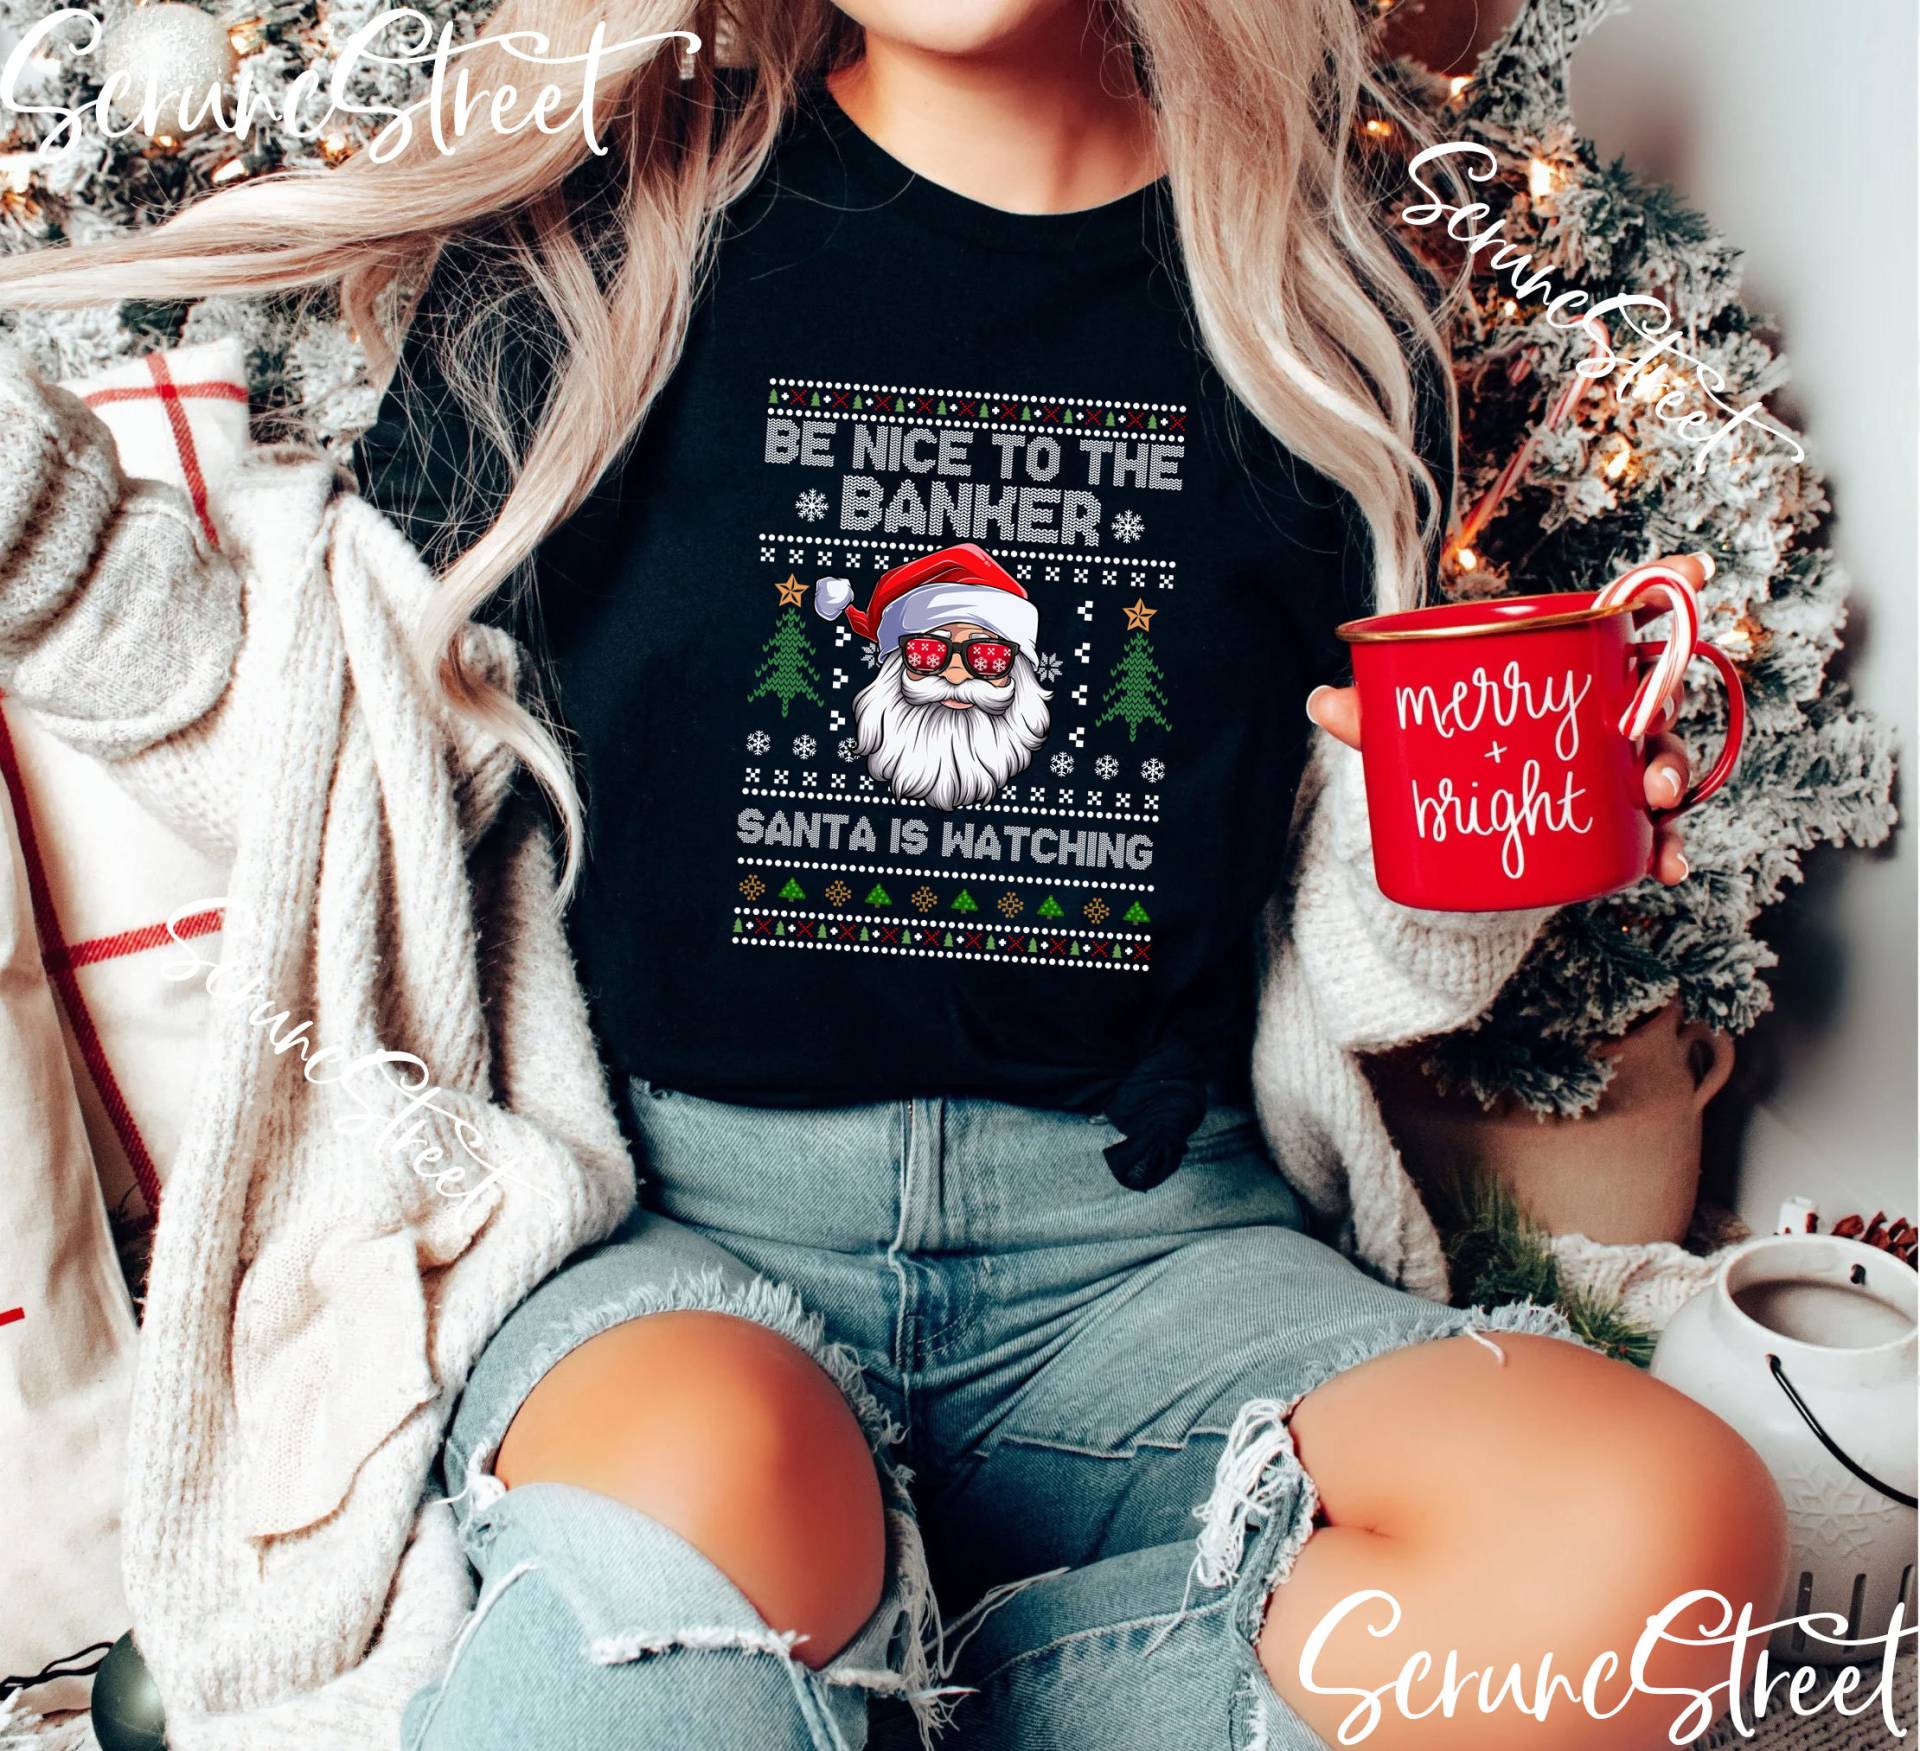 Be Nice To The Banker Santa Is Watching Christmas Shirt, T-Shirt, Geschenke, Weihnachtsgeschenke Für Banker, Geschenkideen von ScruncStreet